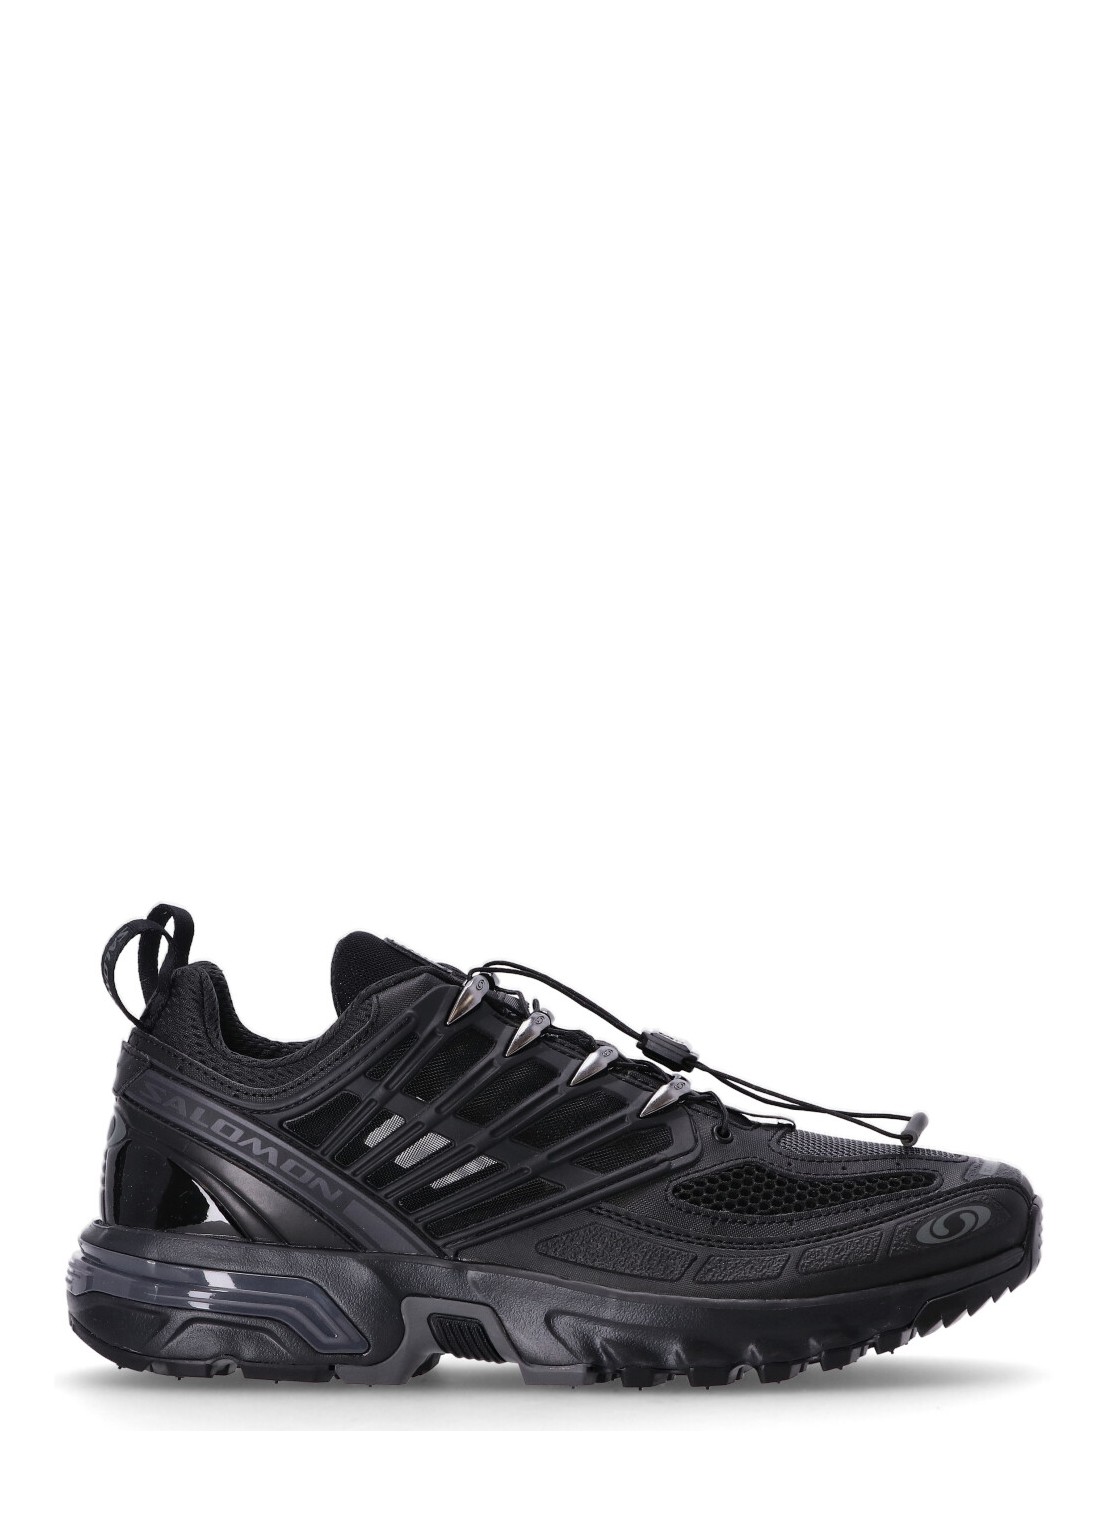 Sneaker salomon sneaker man acs pro l47179800 black black black talla 42 2/3
 